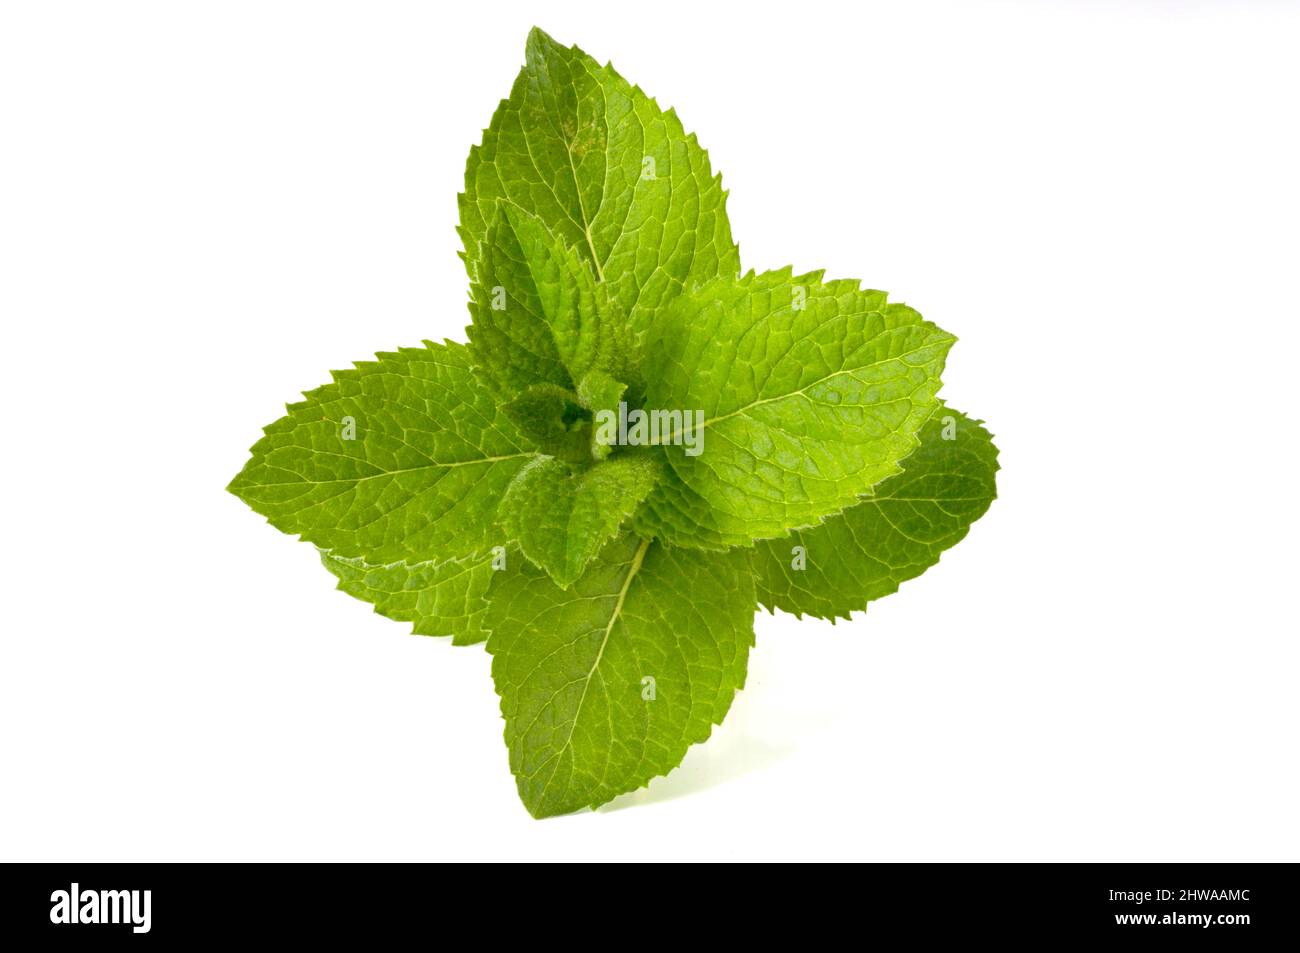 apple mint, pineapple mint, woolly mint, round-leafed mint (Mentha suaveolens, Mentha x rotundifolia), cultivar Bowles Stock Photo